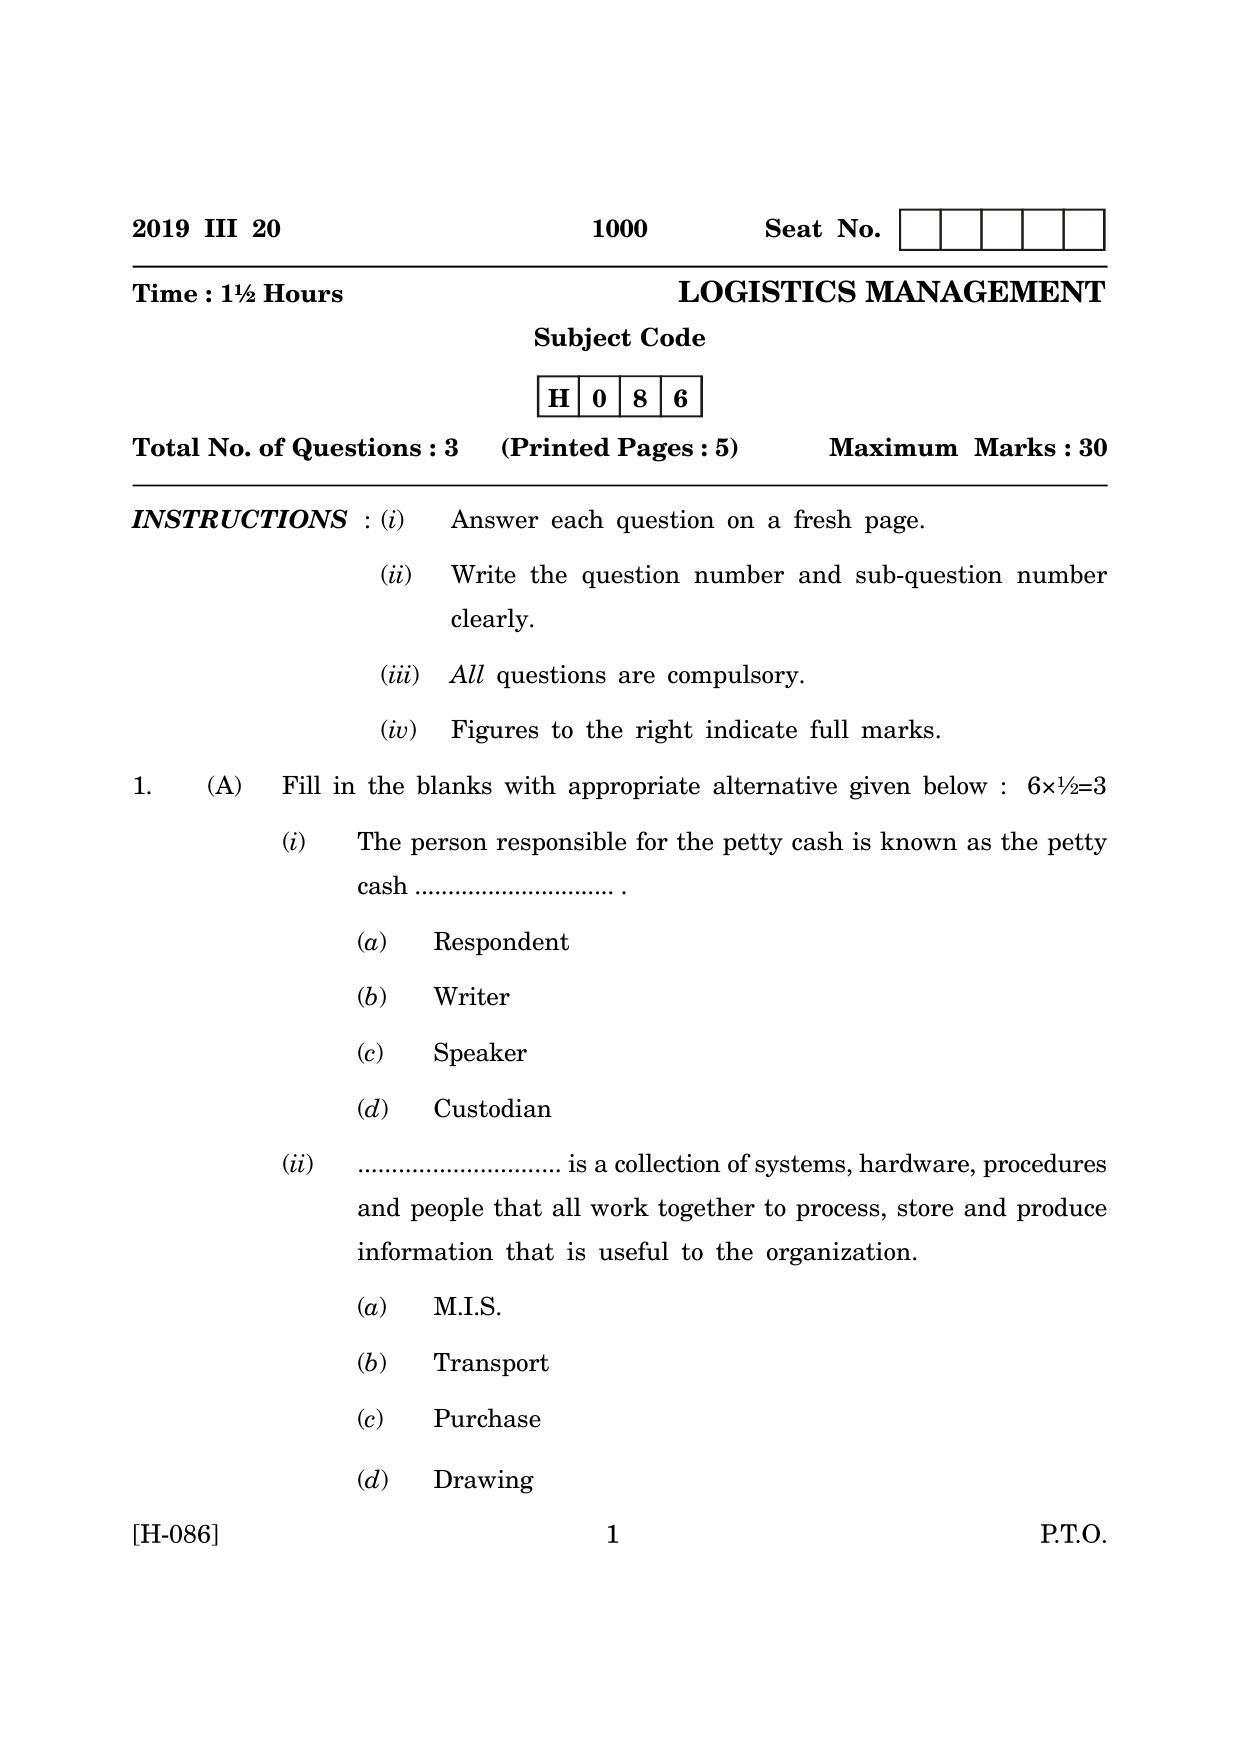 Goa Board Class 12 Logistics Management   (March 2019) Question Paper - Page 1